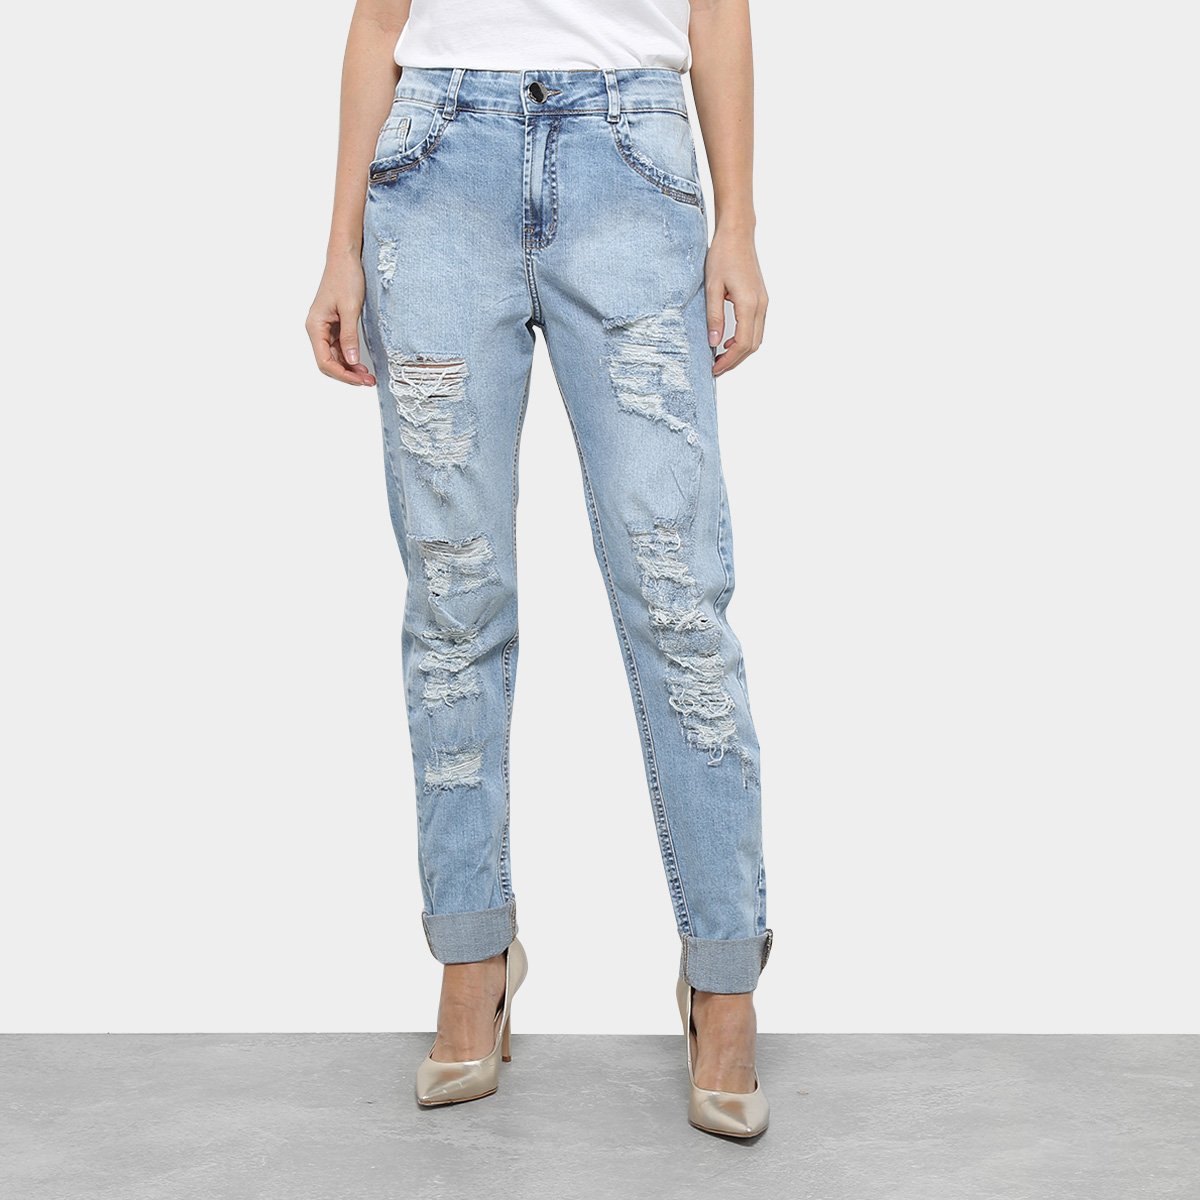 calça jeans armani feminina